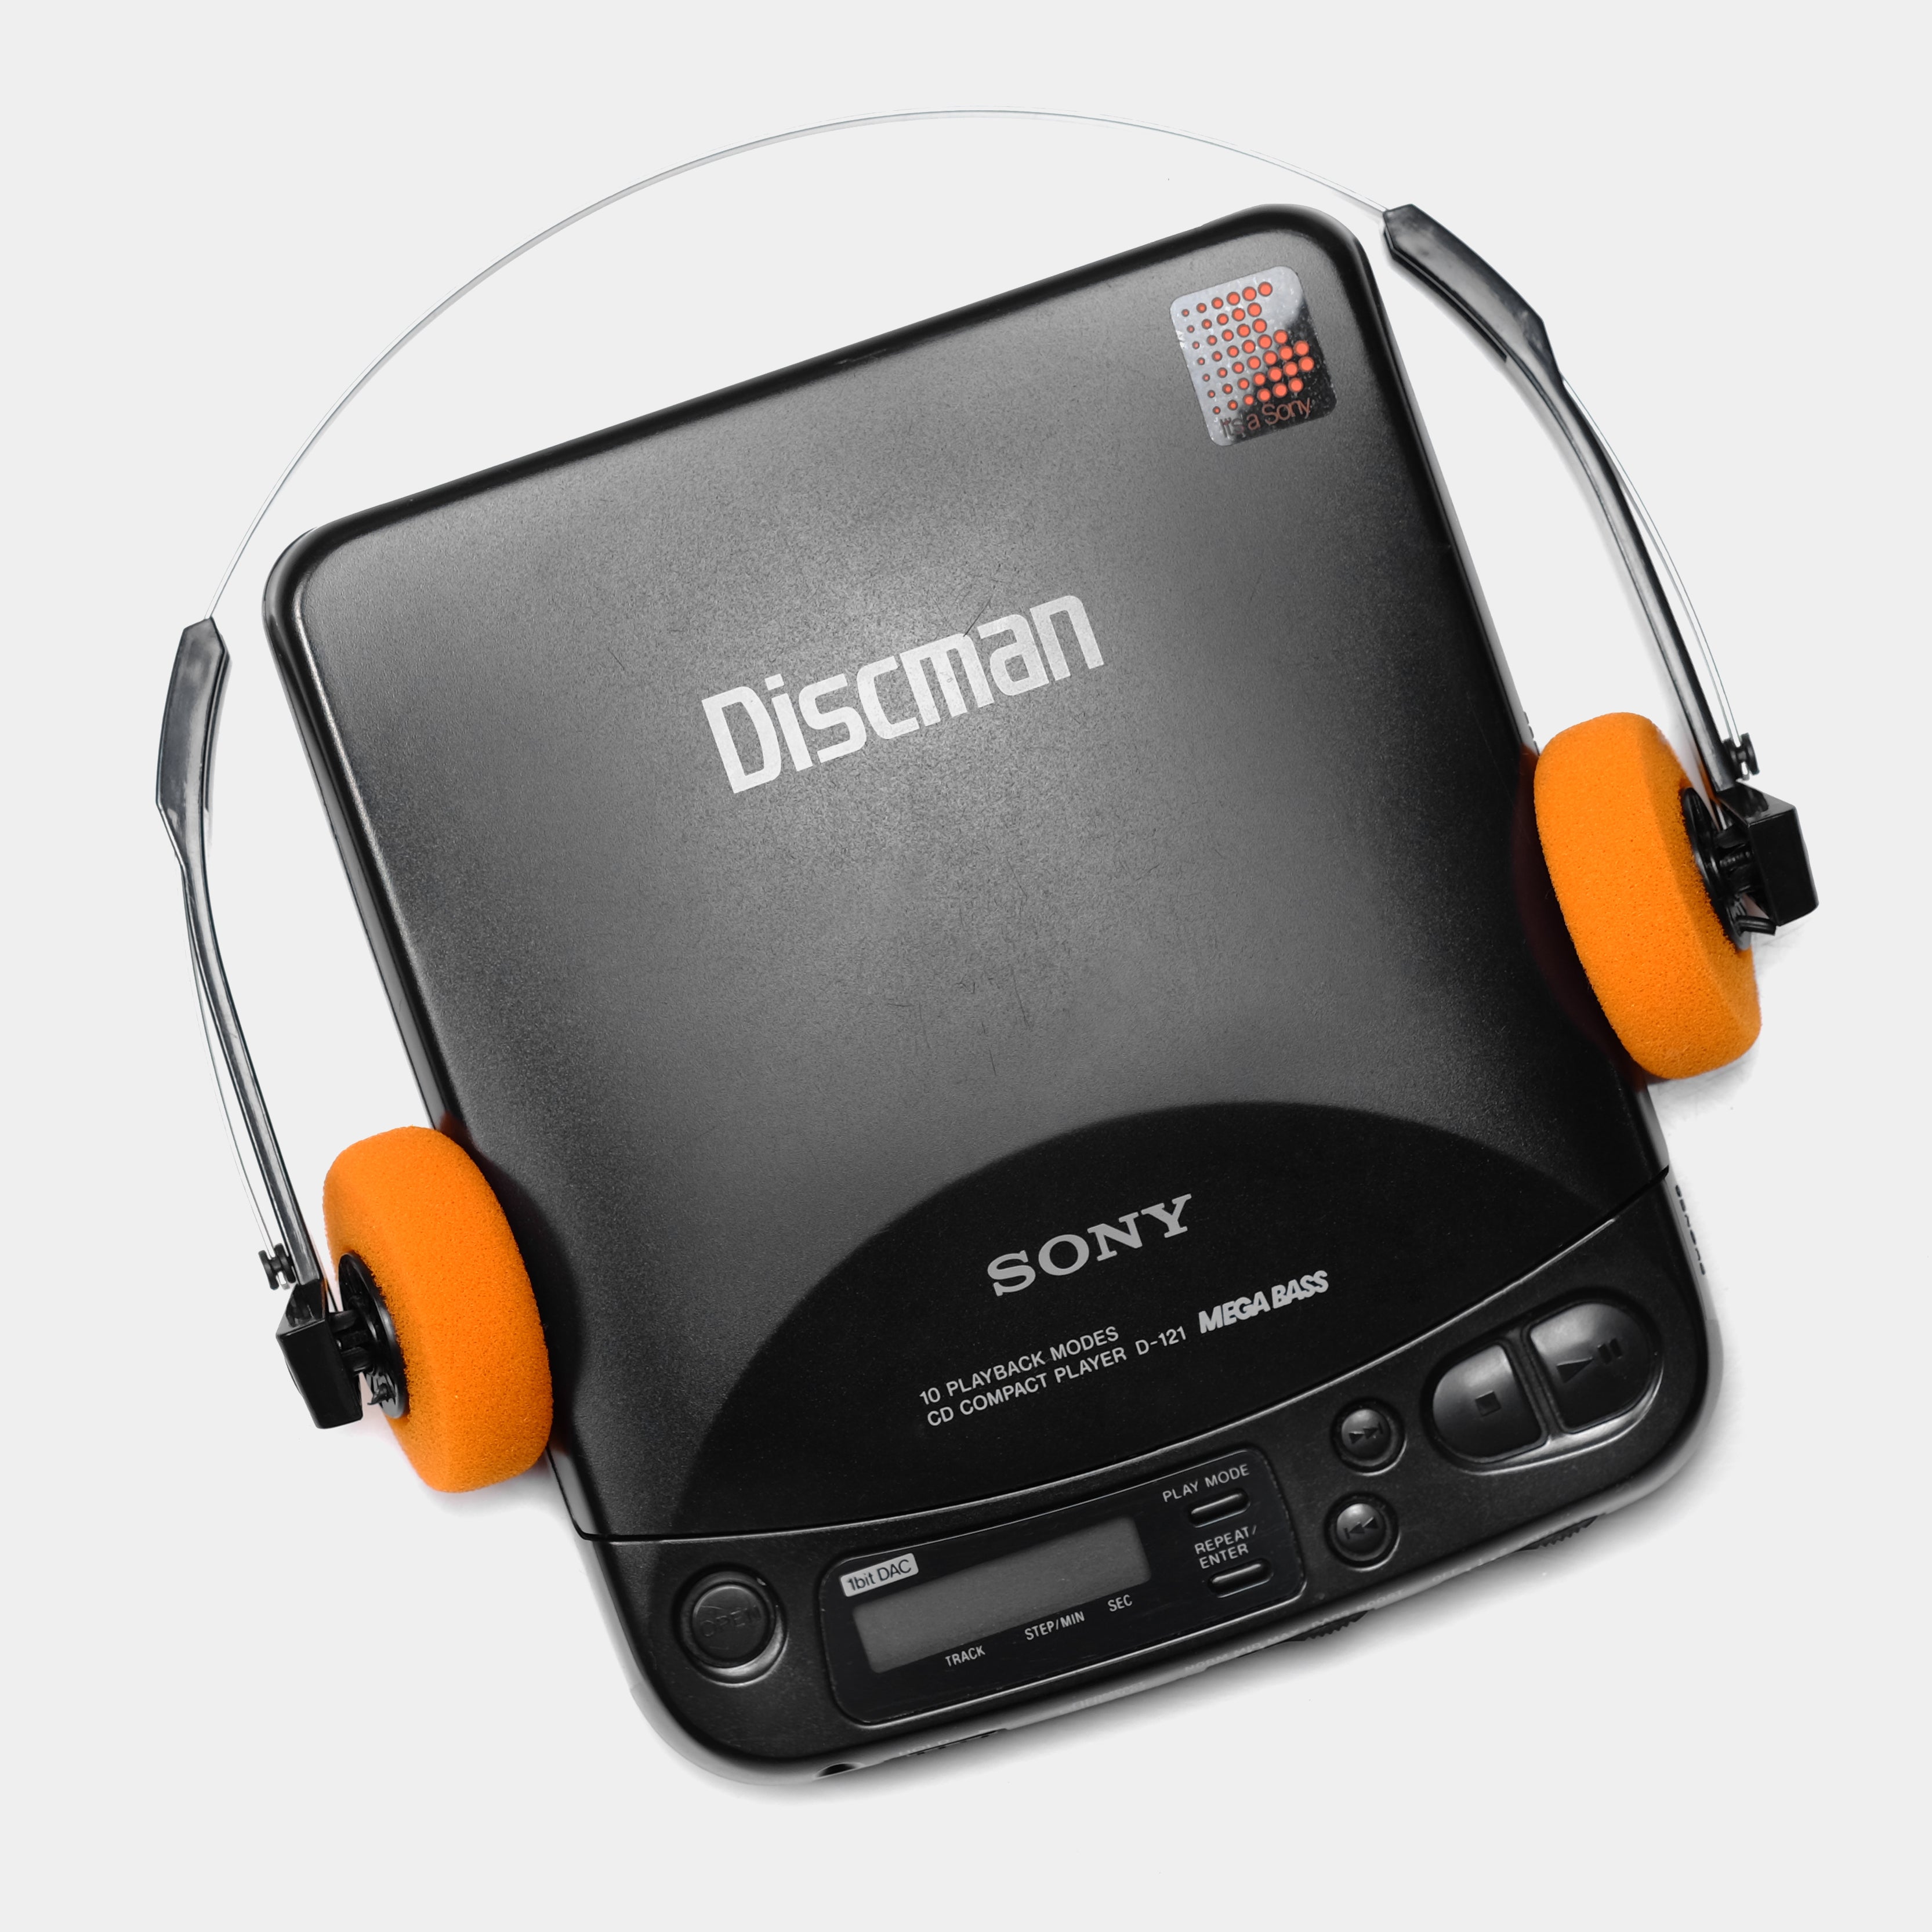 Sony Discman D-121 Portable CD Player